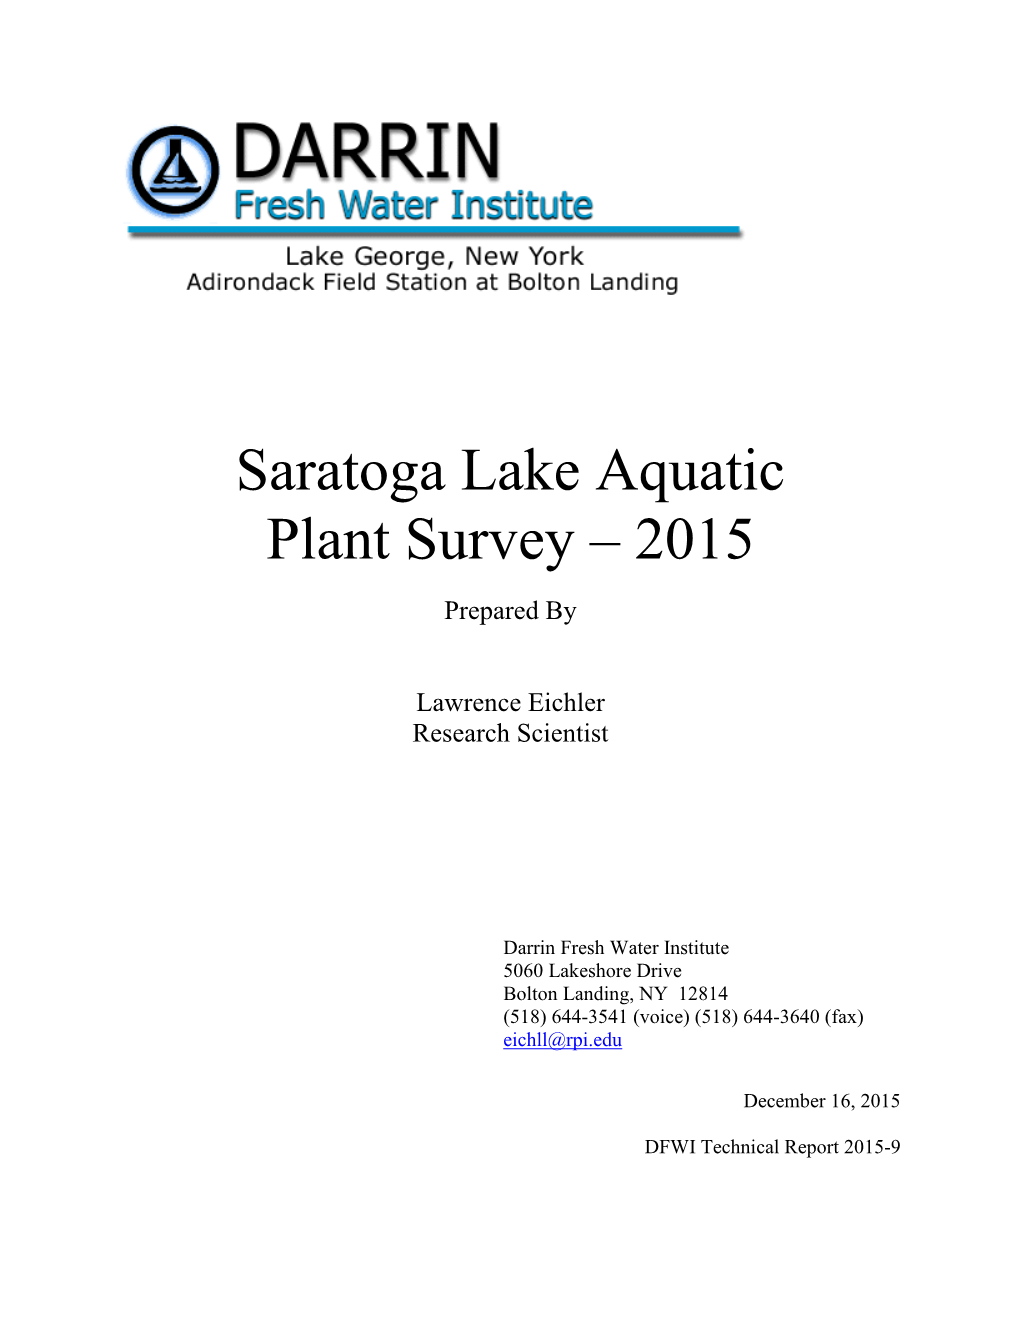 Aquatic Plants of Saratoga Lake